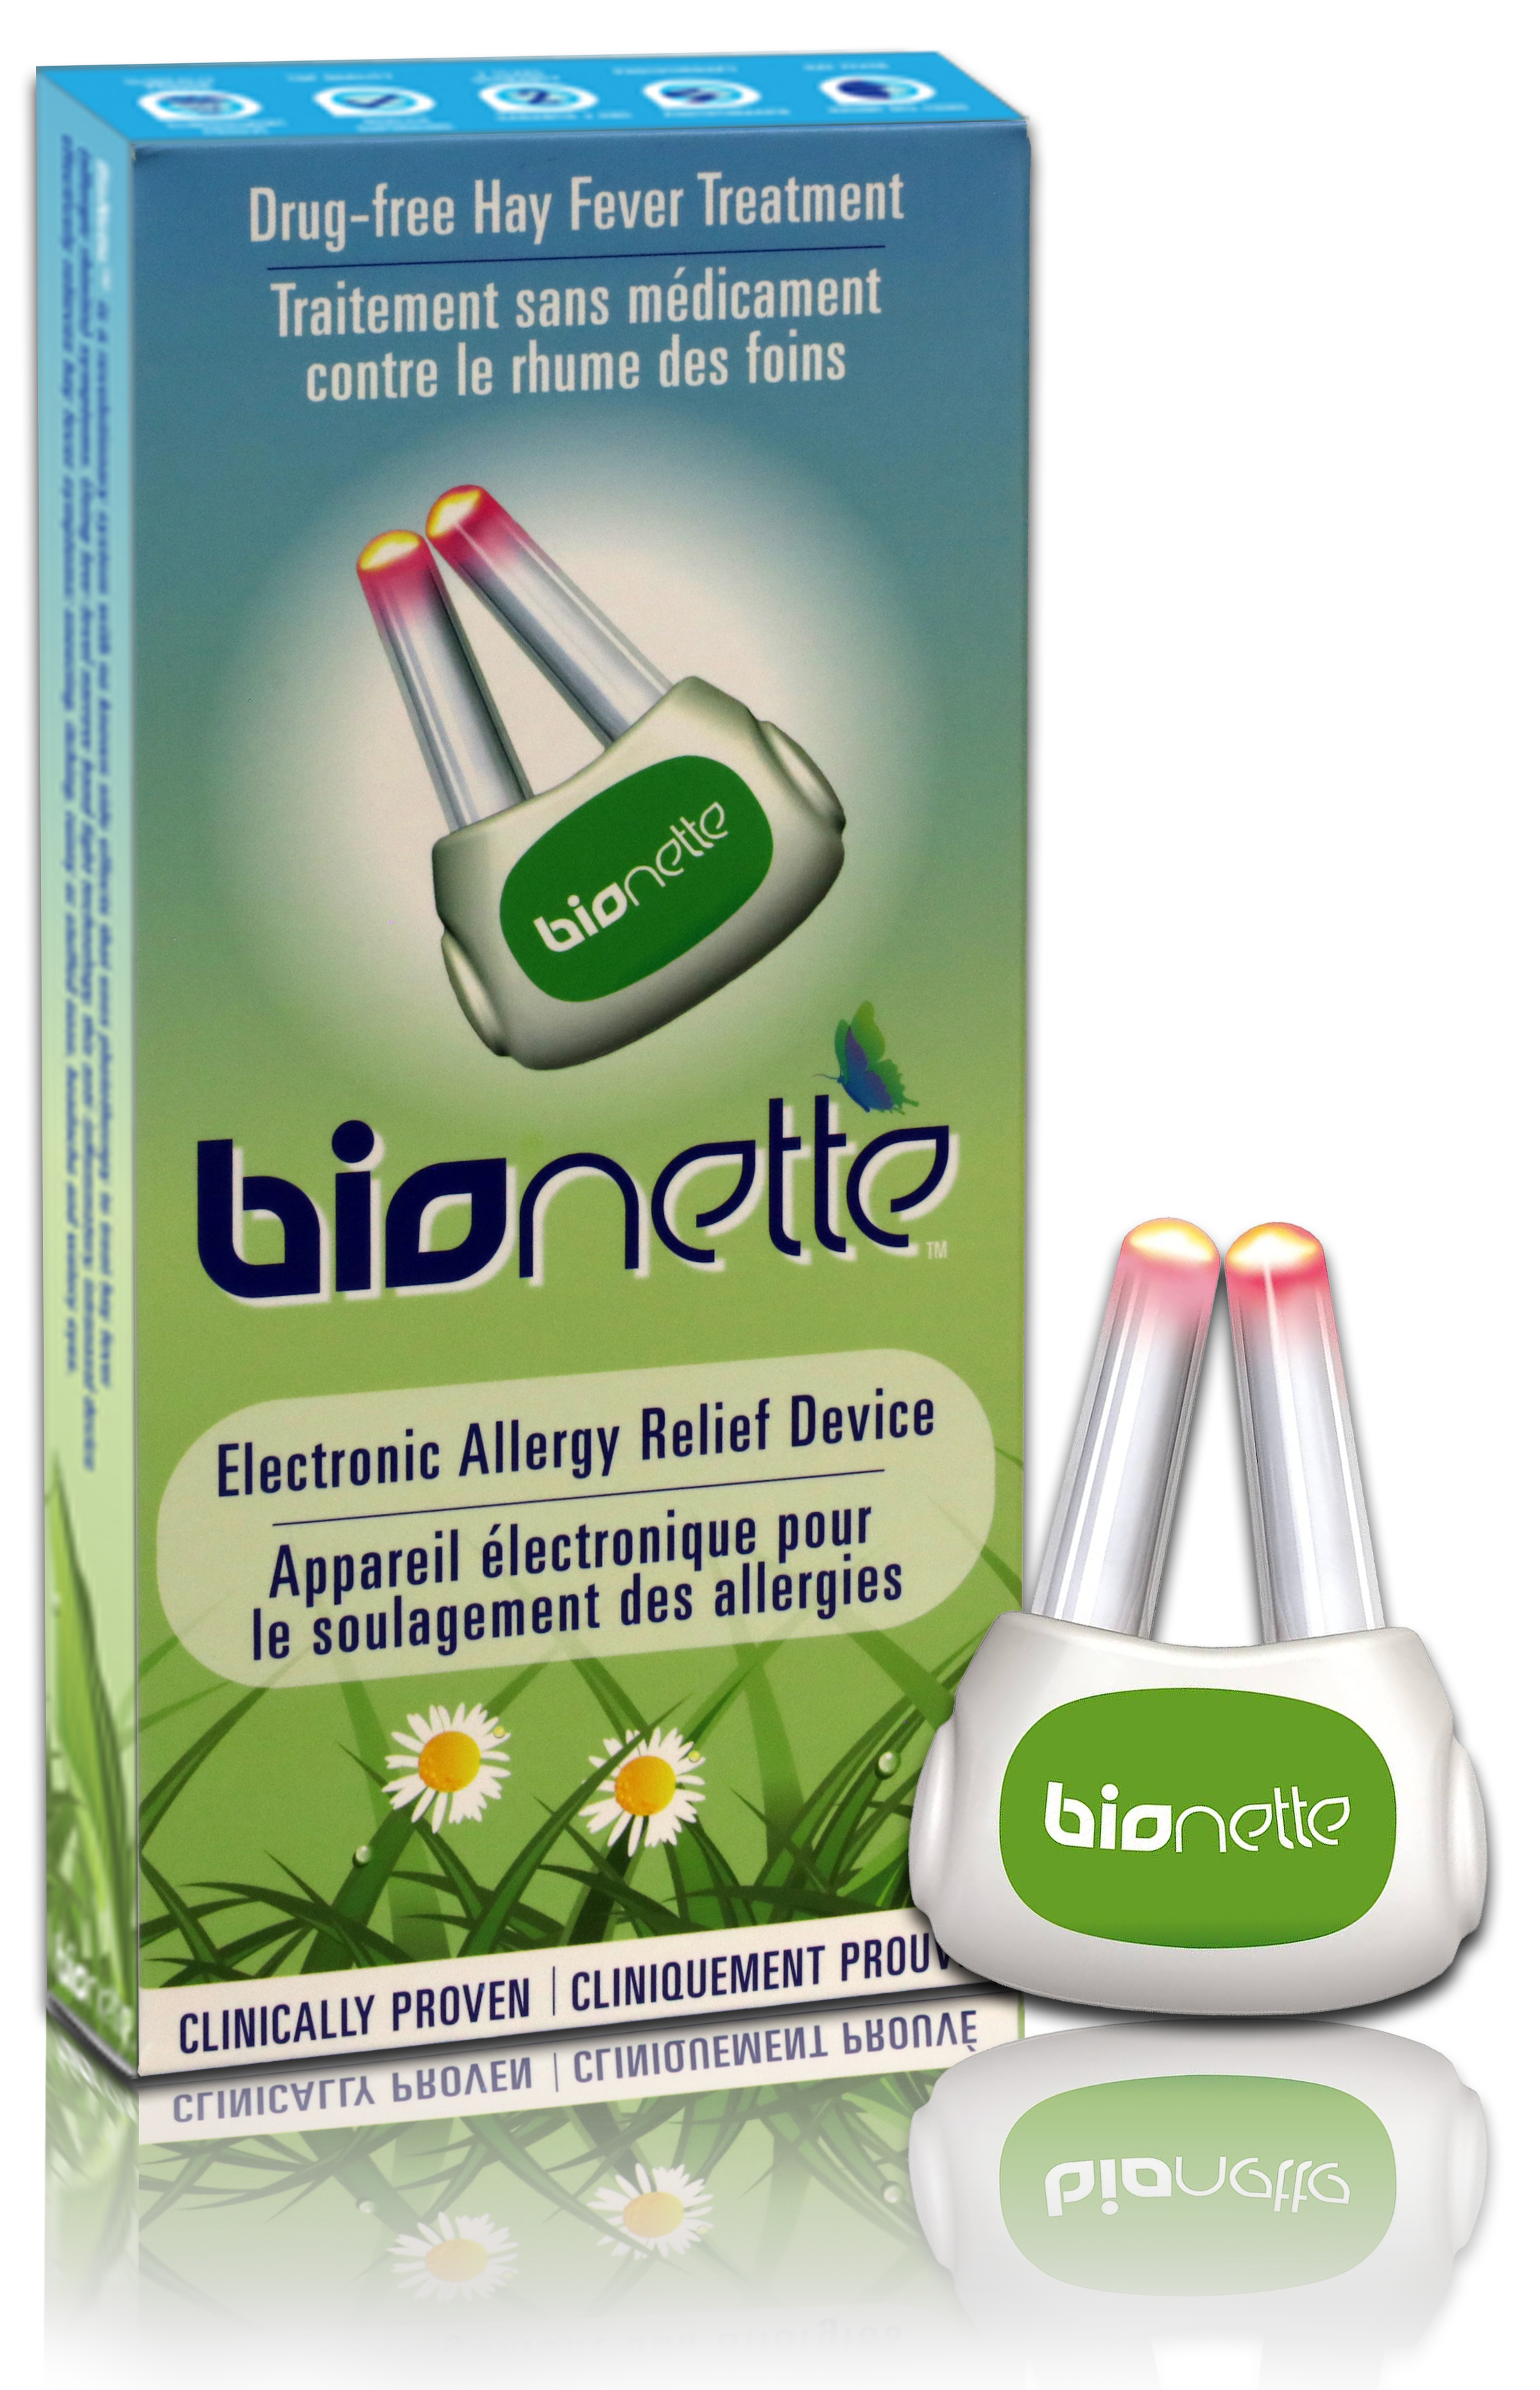 Bionette packaging